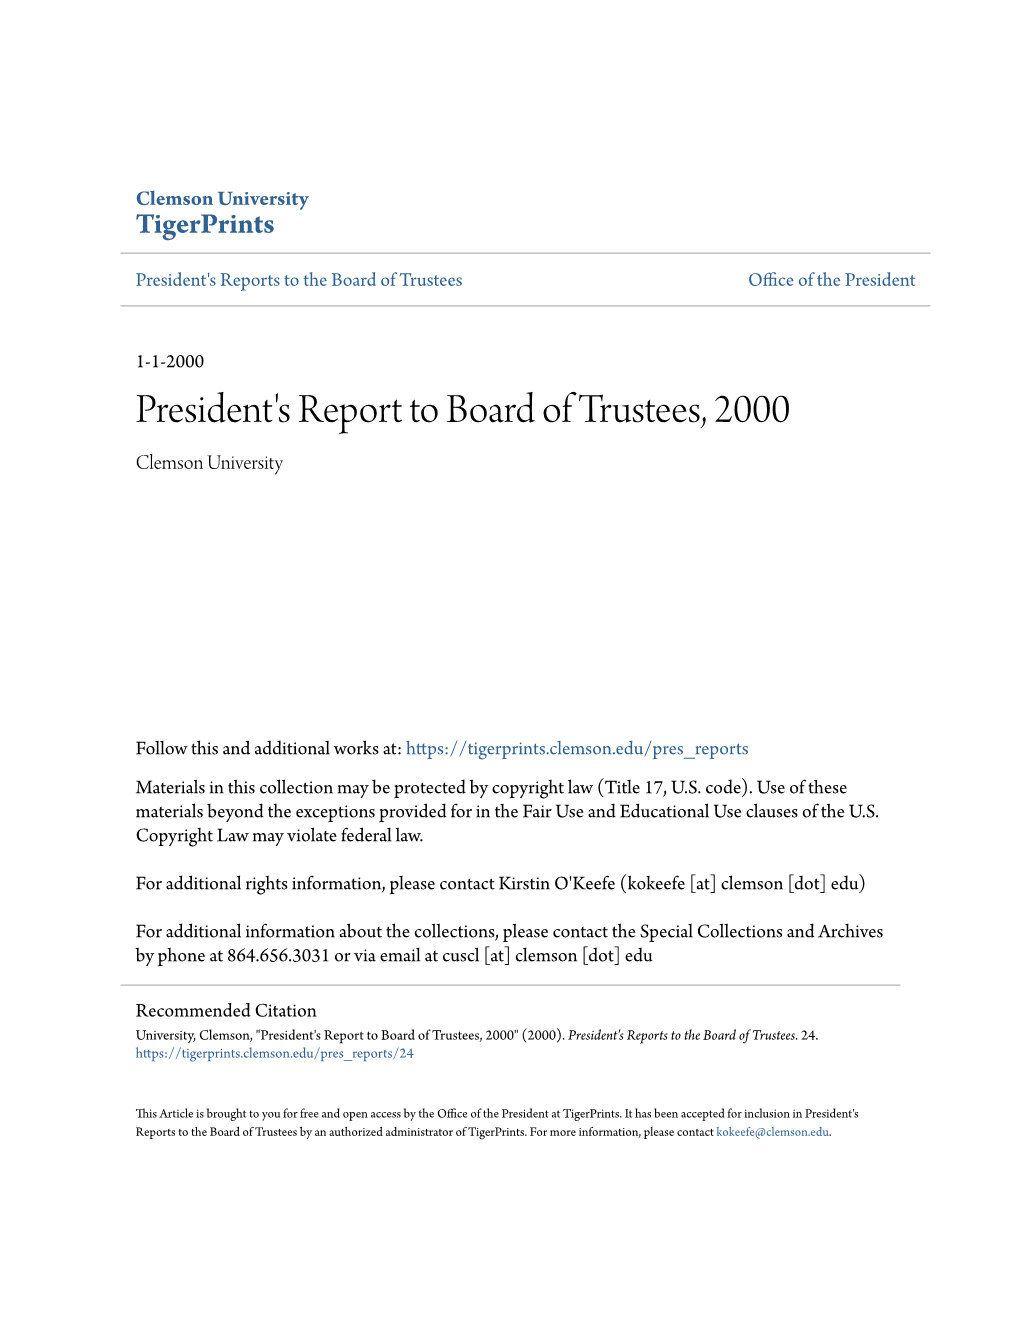 President's Report to Board of Trustees, 2000 Clemson University